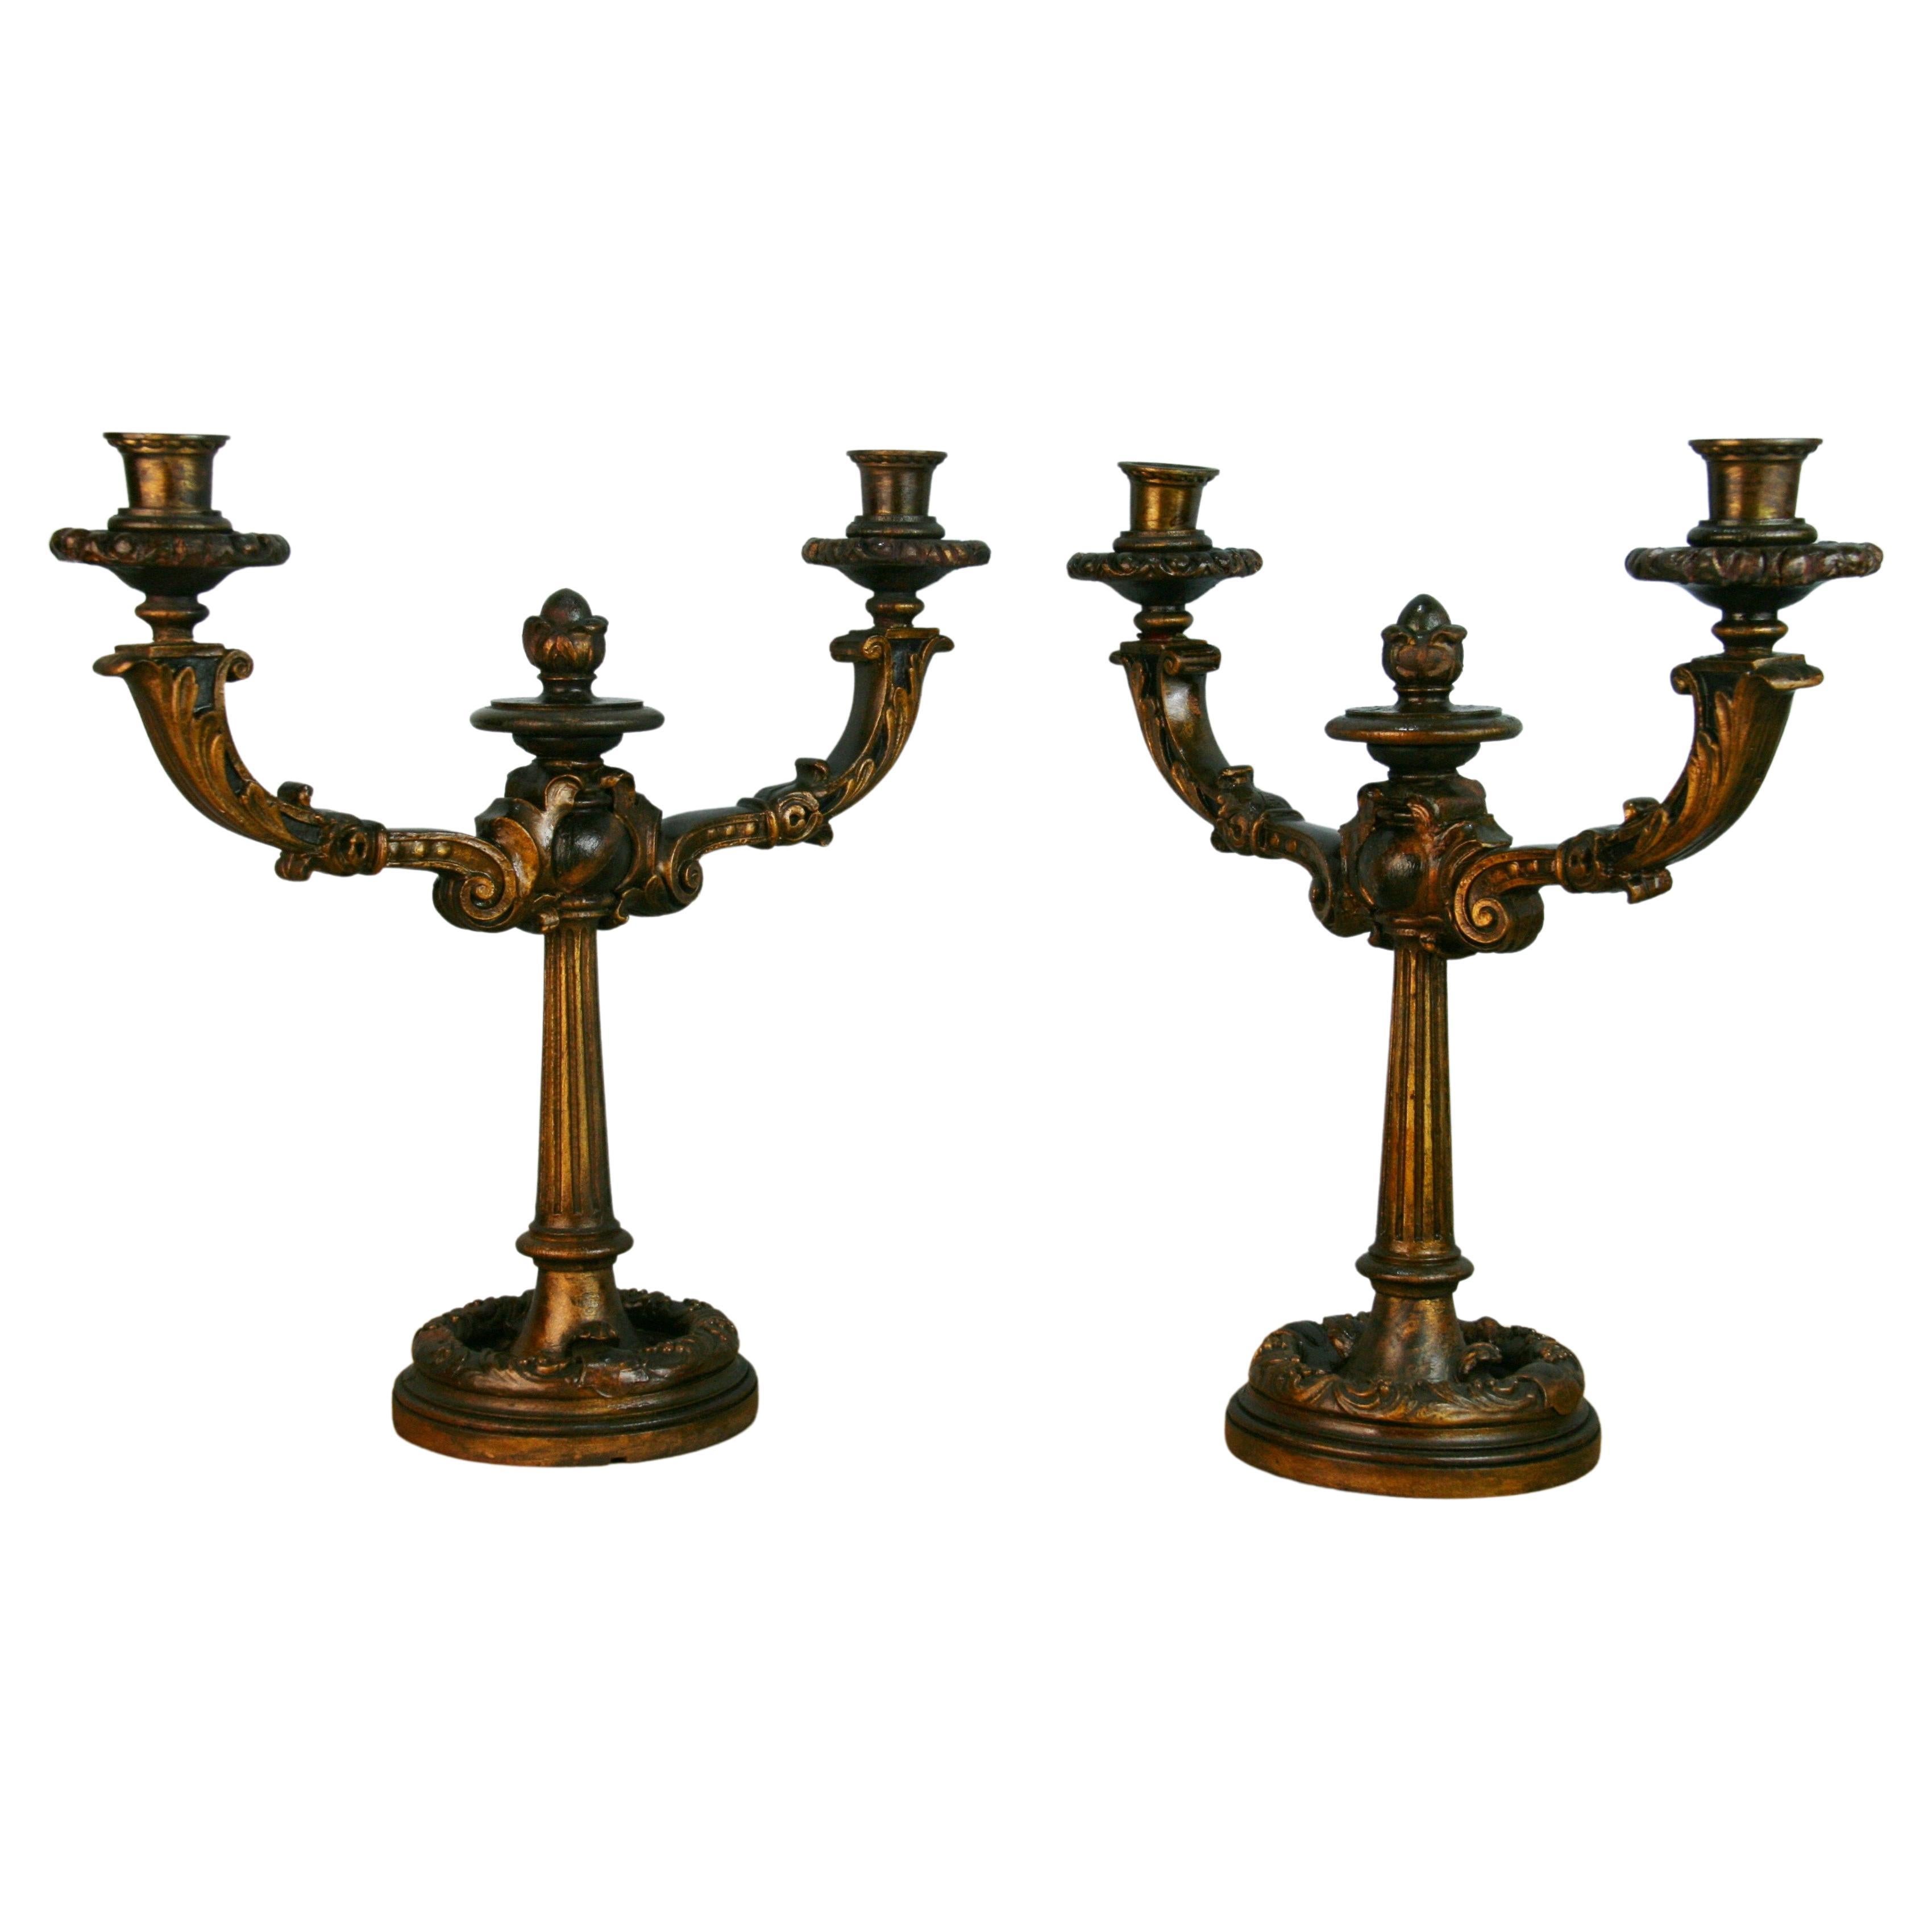 1-800 pair of Italian gilt wood candelabras.
Priced per pair.